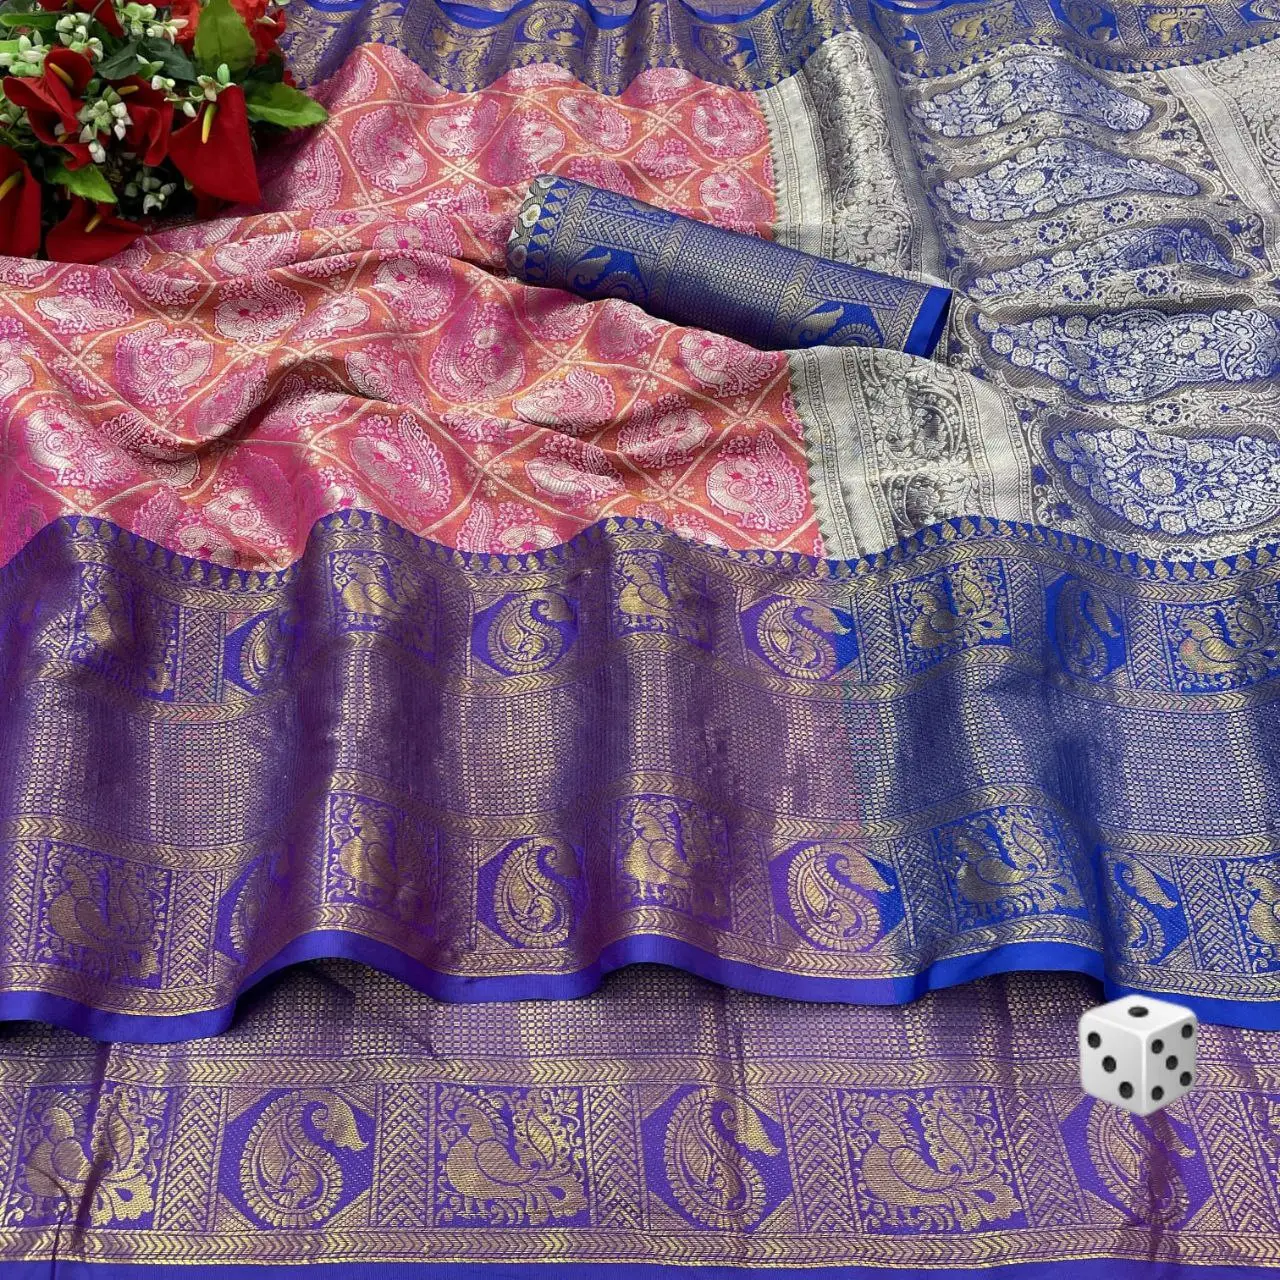 FULPARI Contrast Exclusive Pure WOMAN SAREE NEW FASHION Fabric: Banarasi Silk Length: 6.3 meters SAREE AND blouse